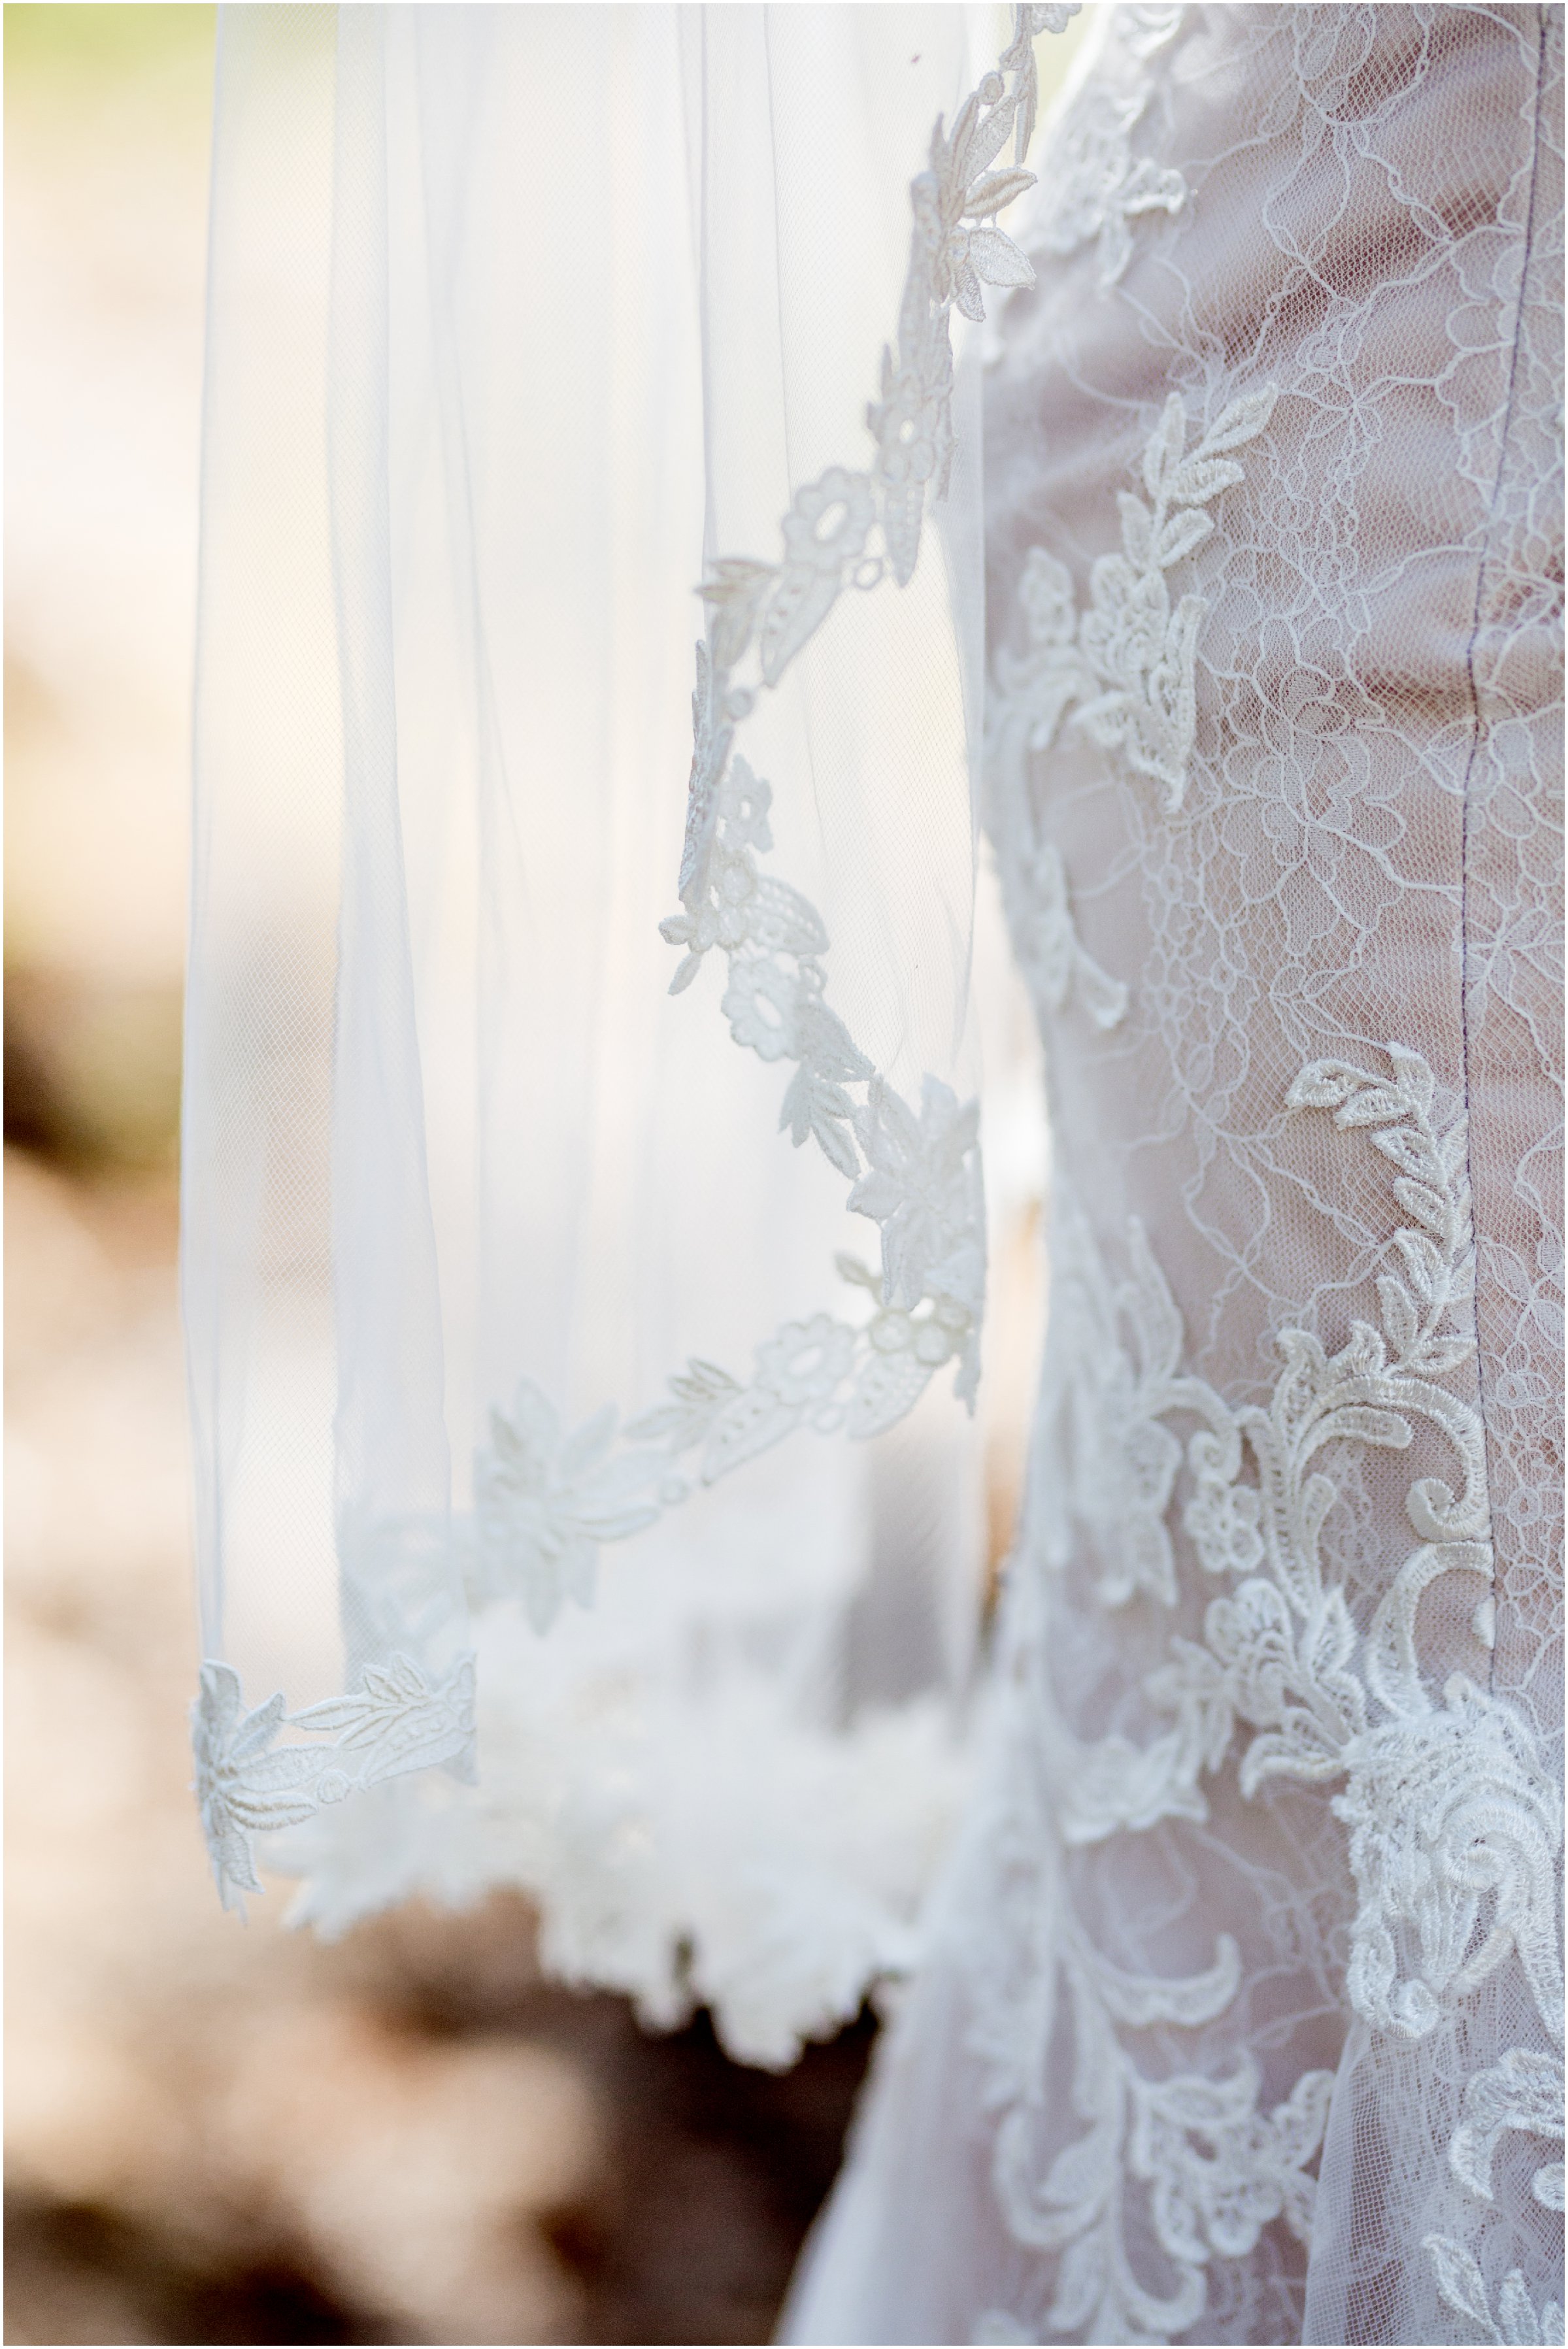 detail shot of bride's veil showing lace edging